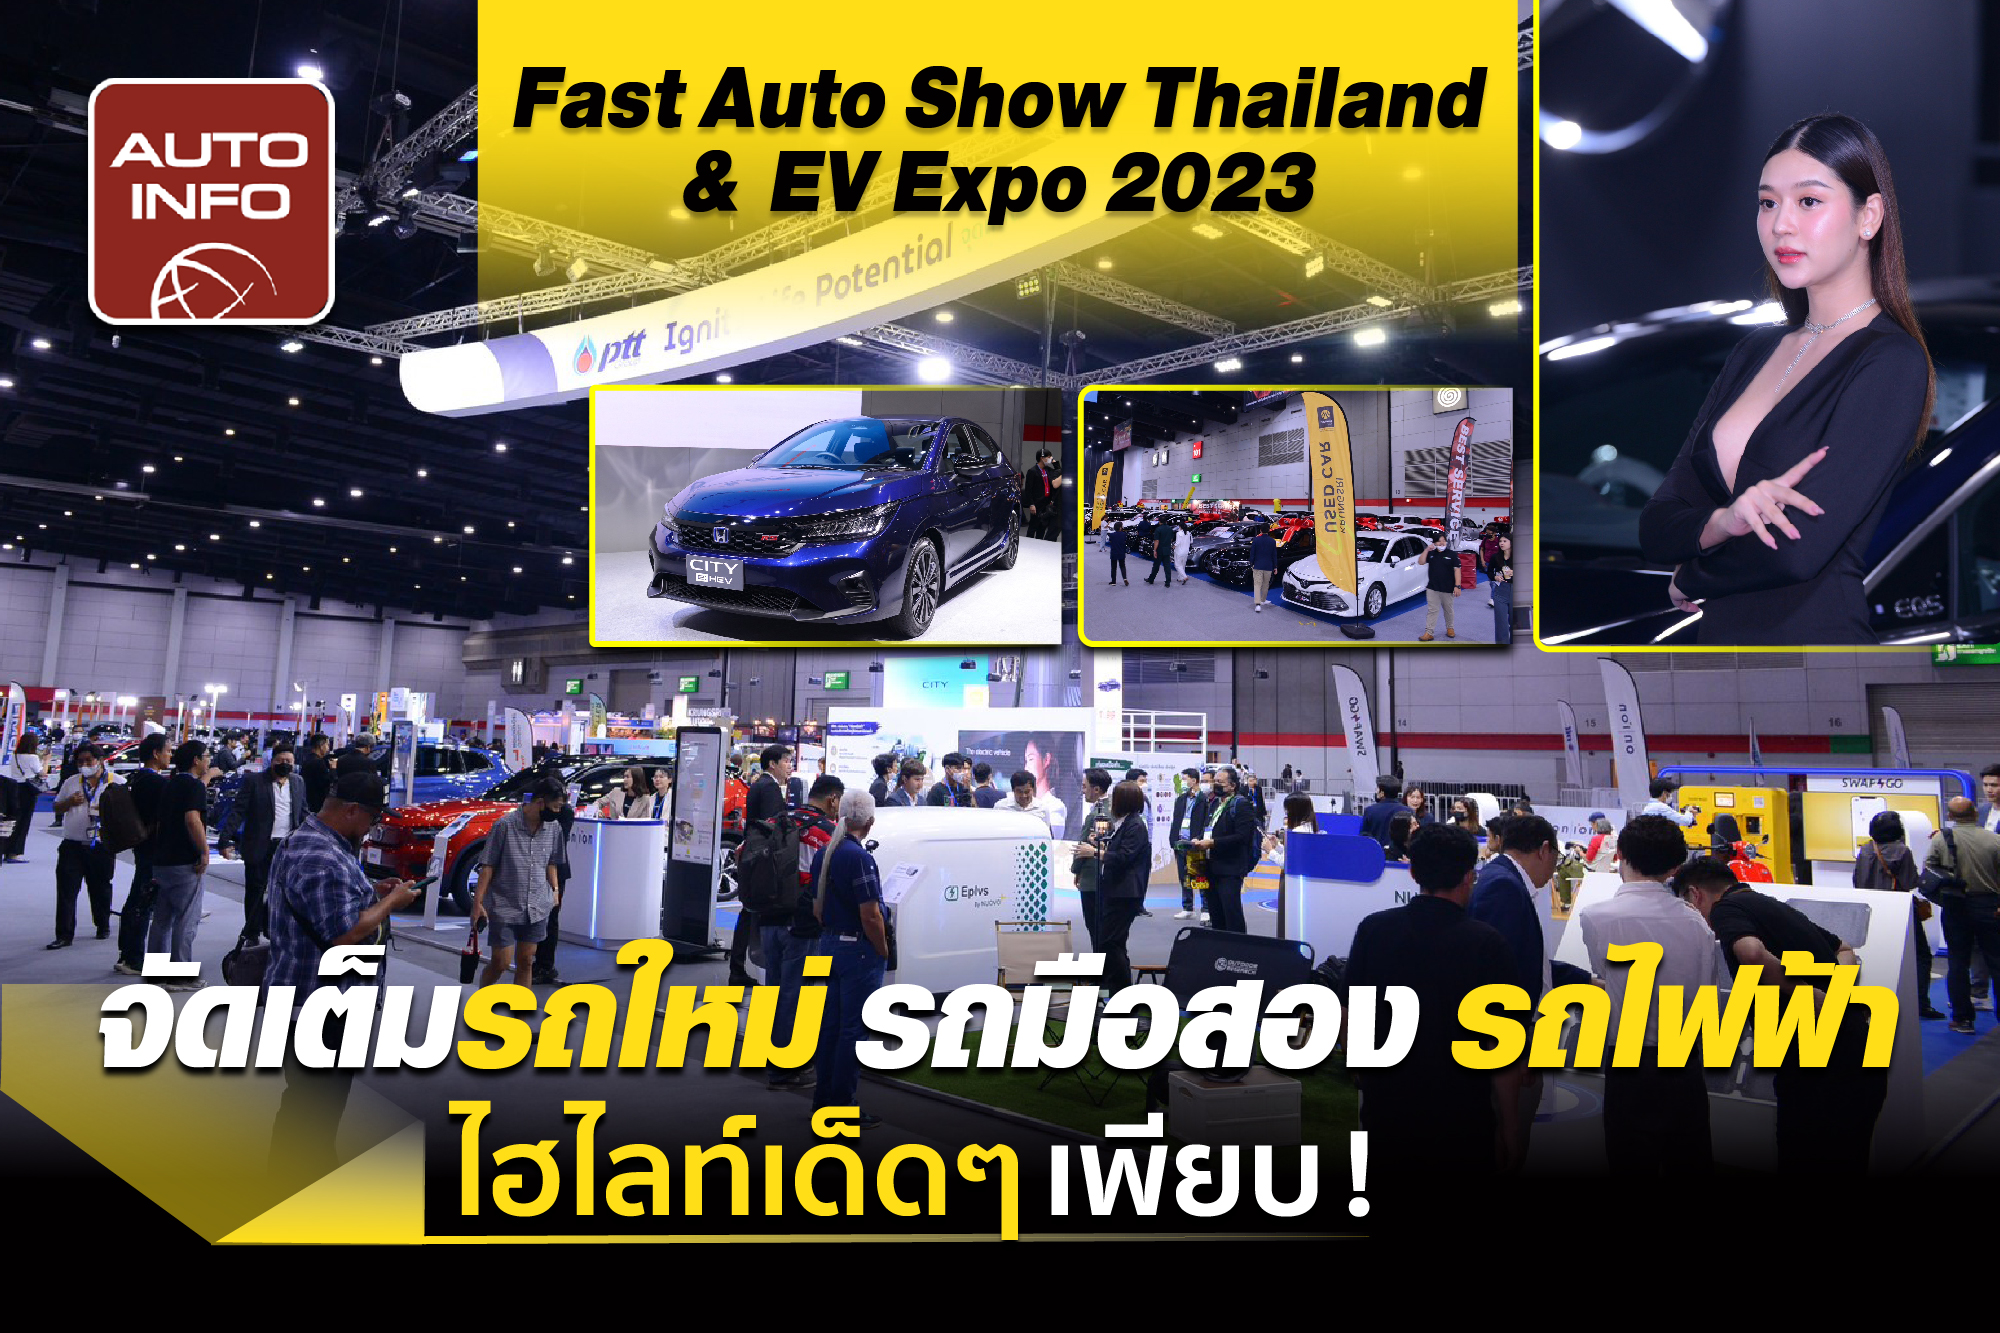 Fast Auto Show Thailand & EV Expo 2023 จัดเต็มรถใหม่ รถมือสอง รถไฟฟ้า !